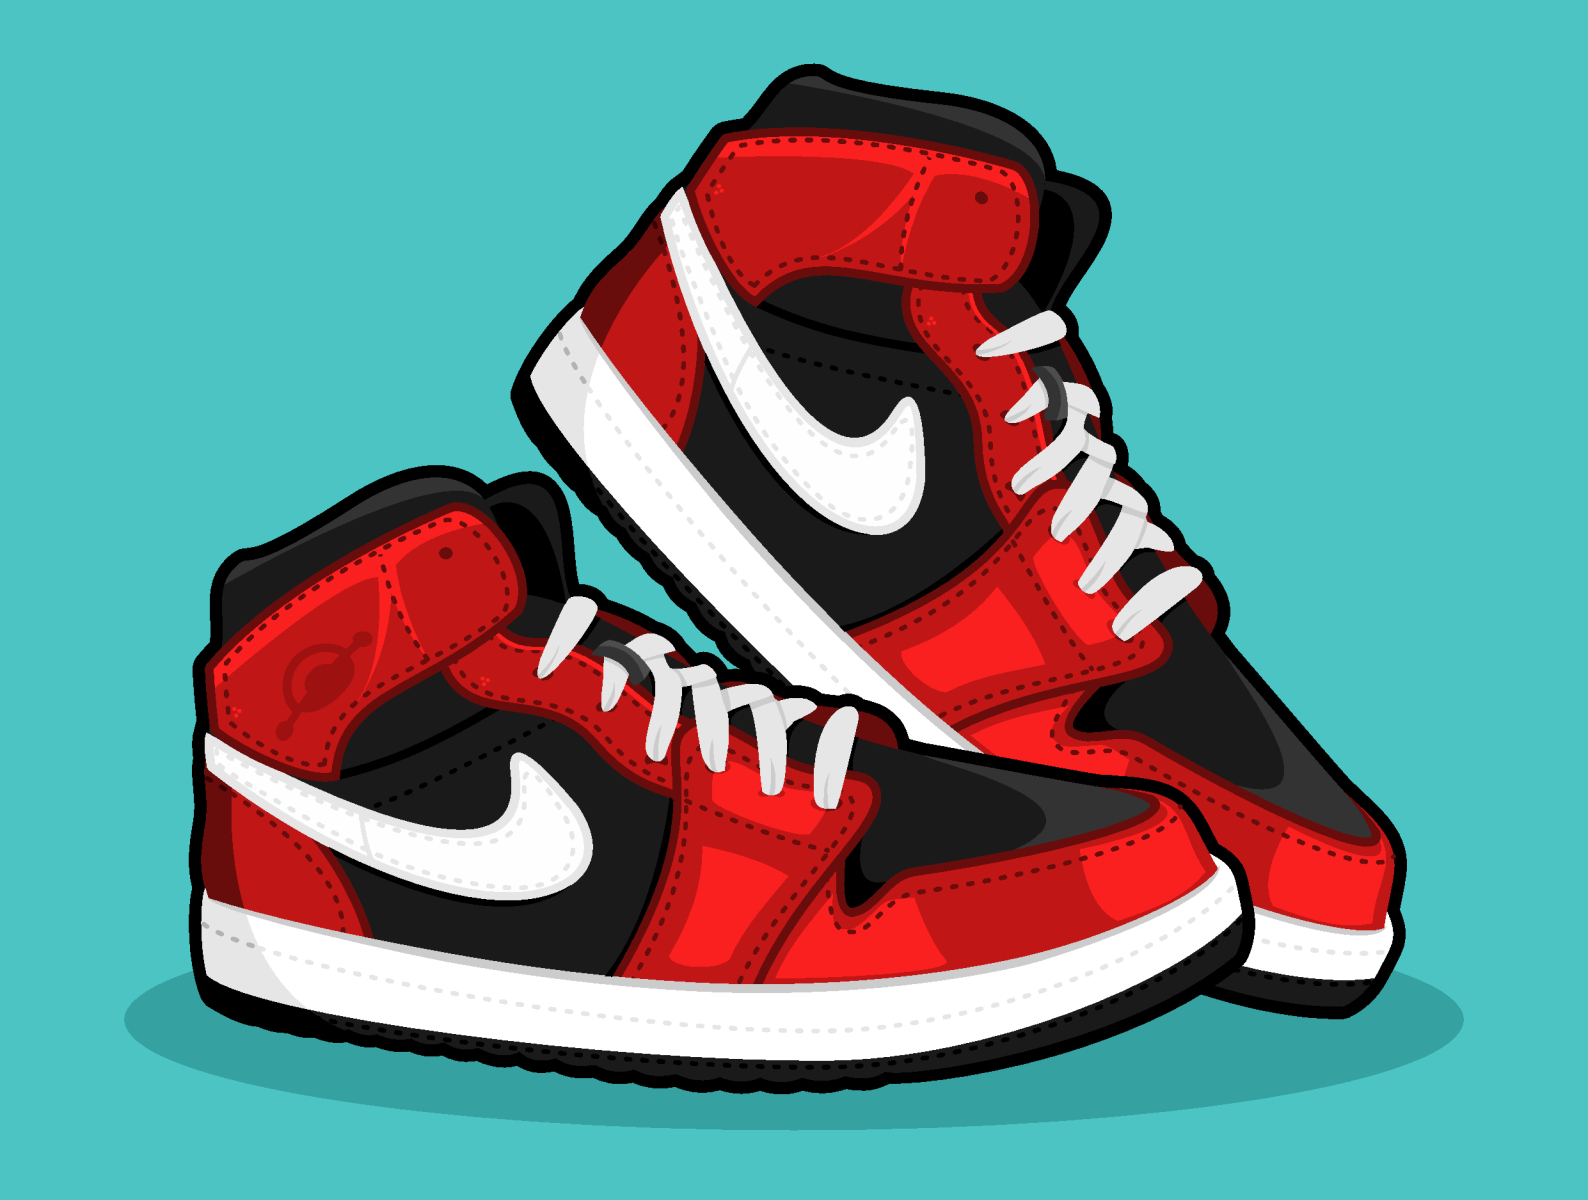 Shoes: Nike Air Jordan 1 by Designtist Chad on Dribbble